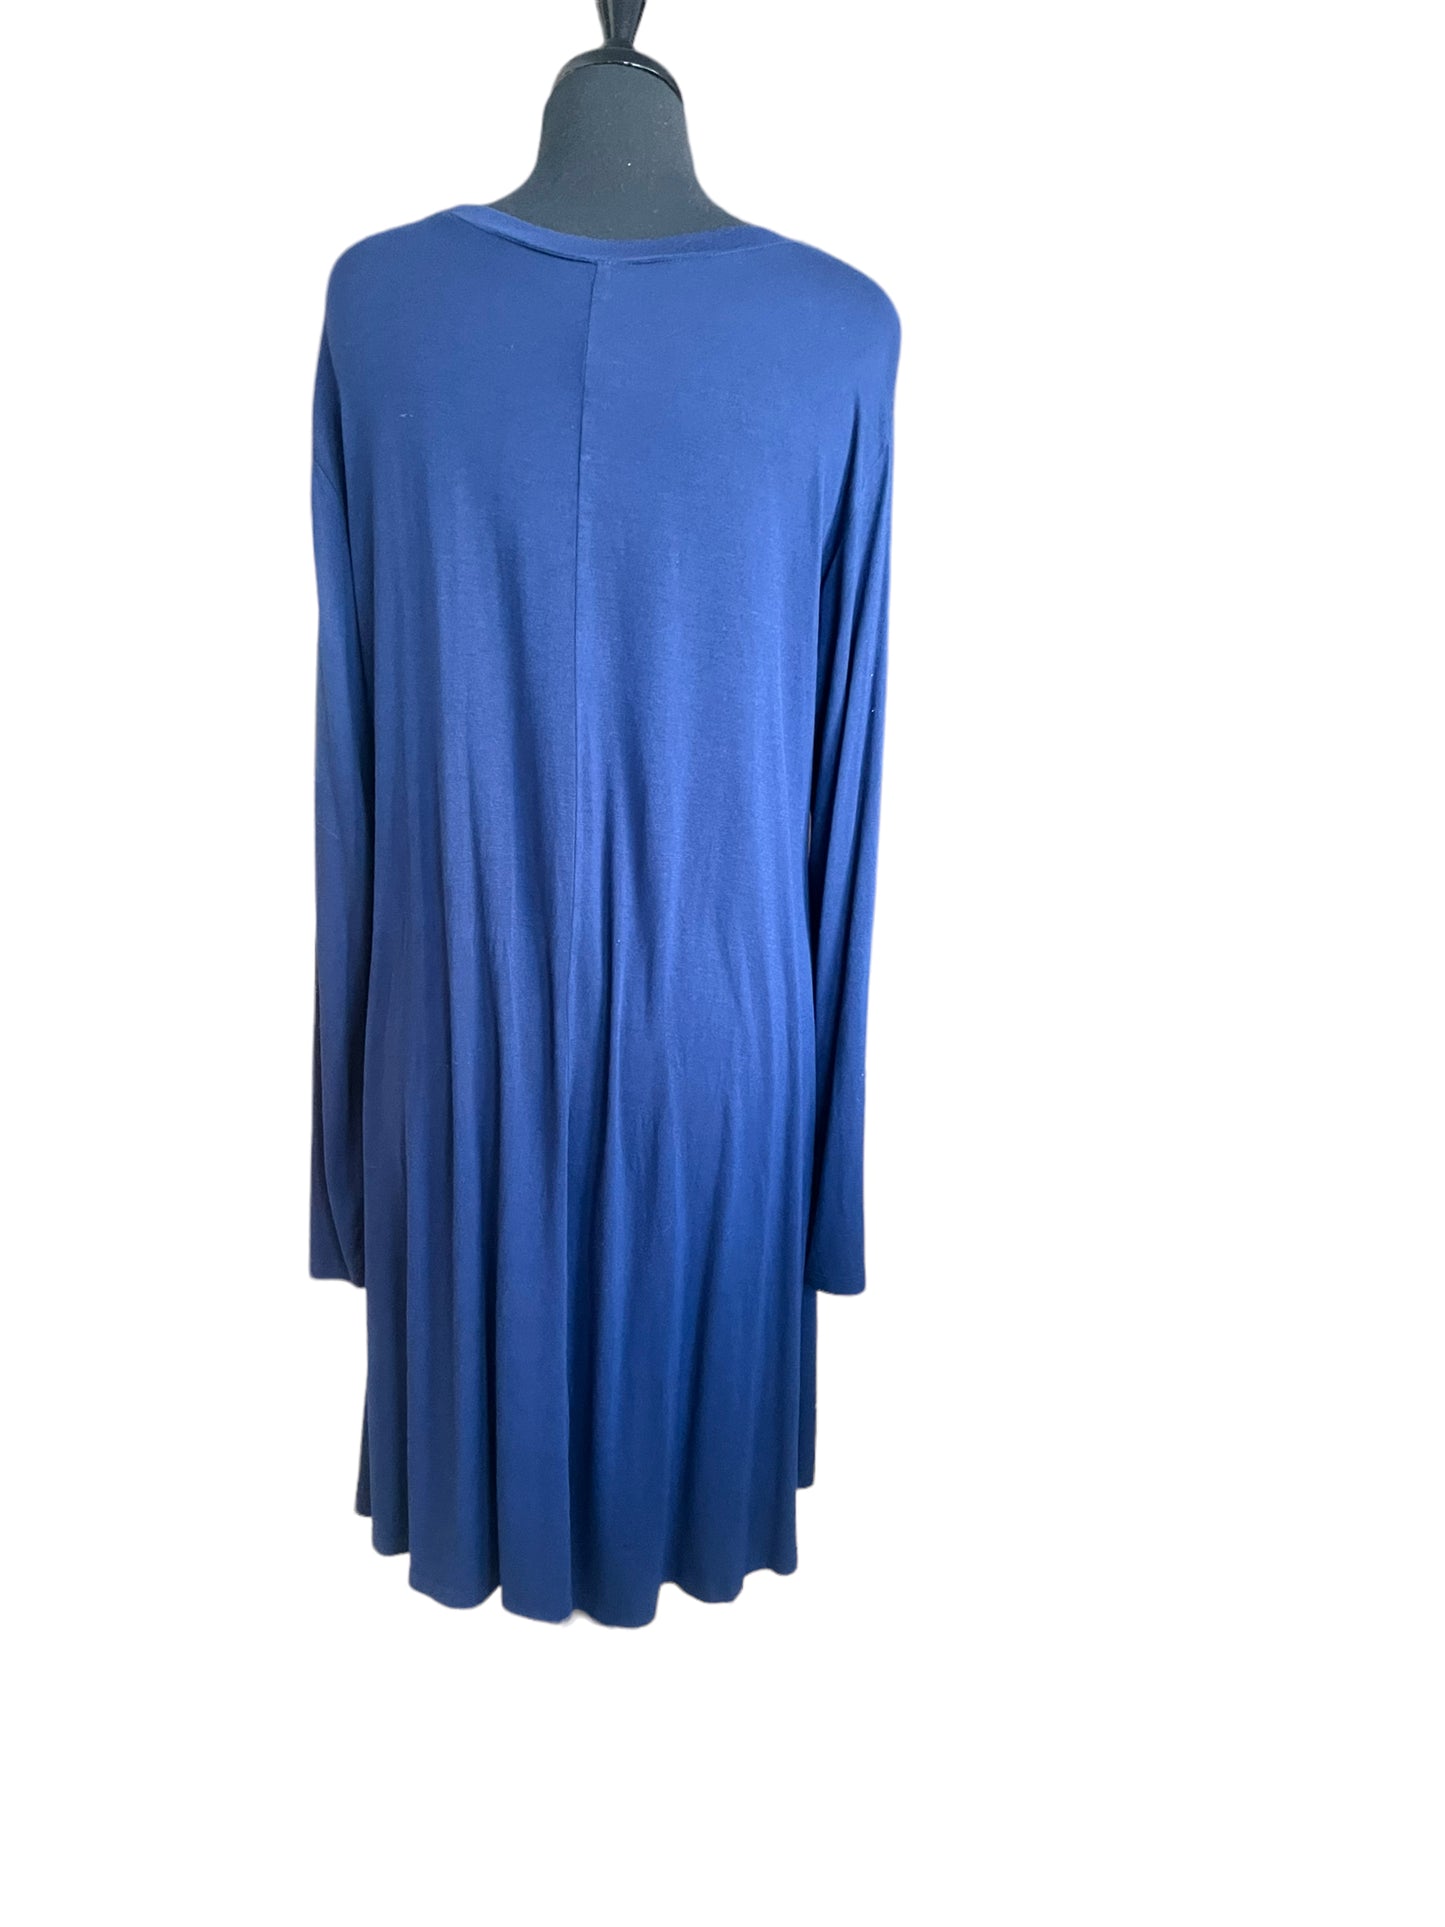 Brand Unknown Blue Dress